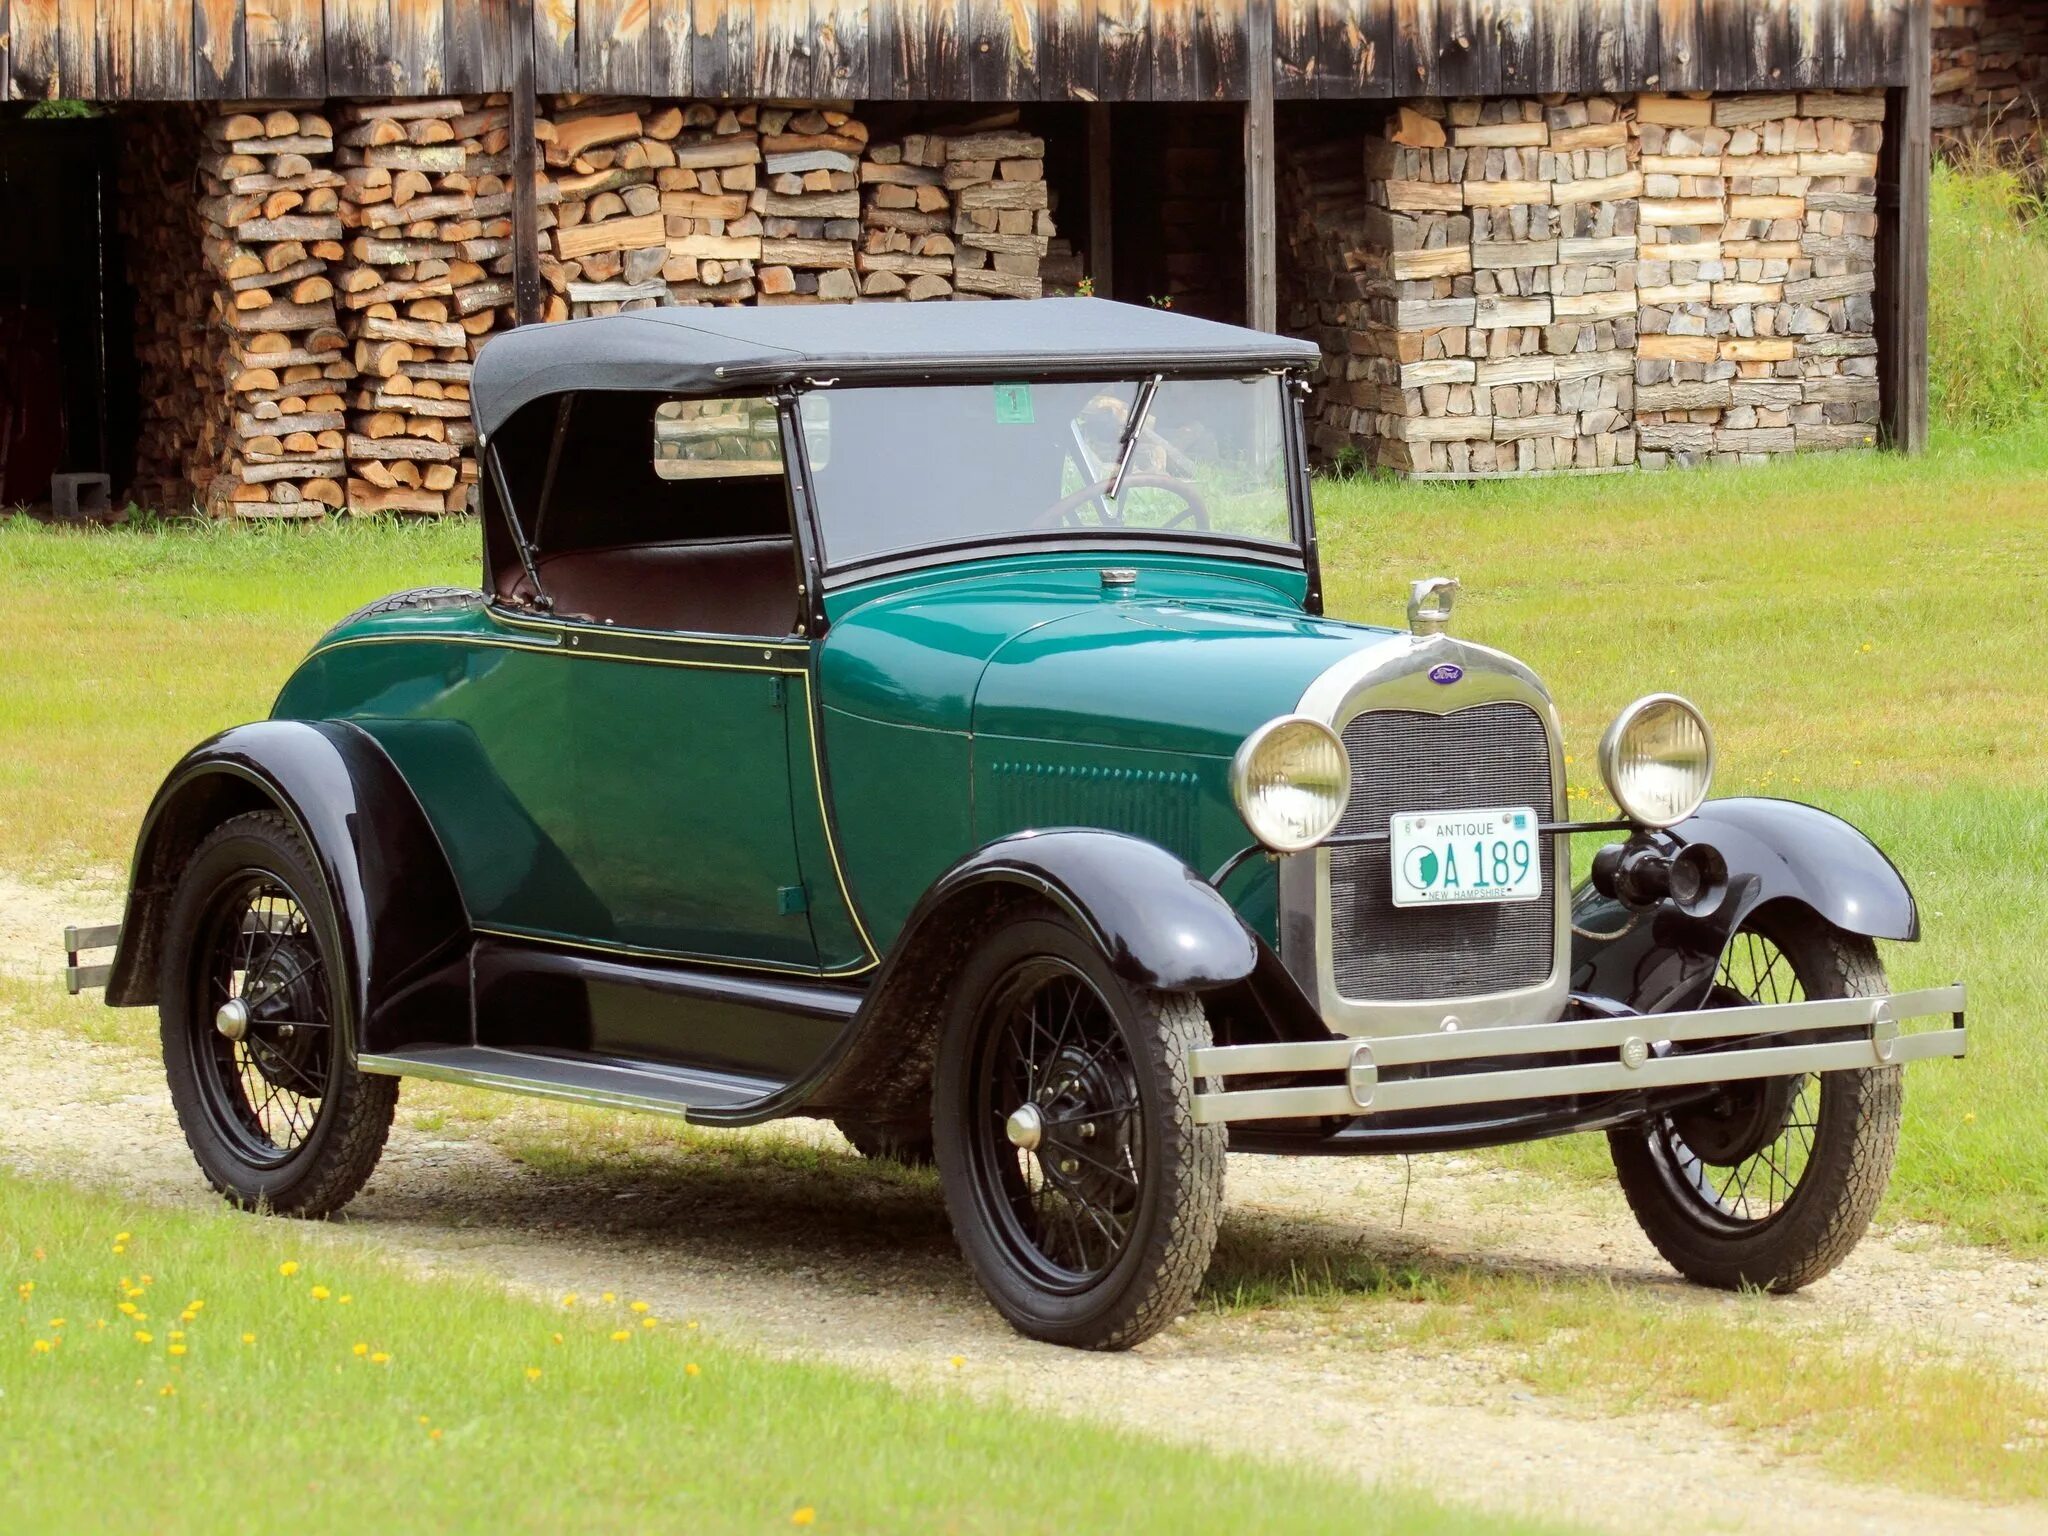 Модель форда. Ford model a 1928. Ford model a (1927). Ford model t 1928. Ford model s 1928.